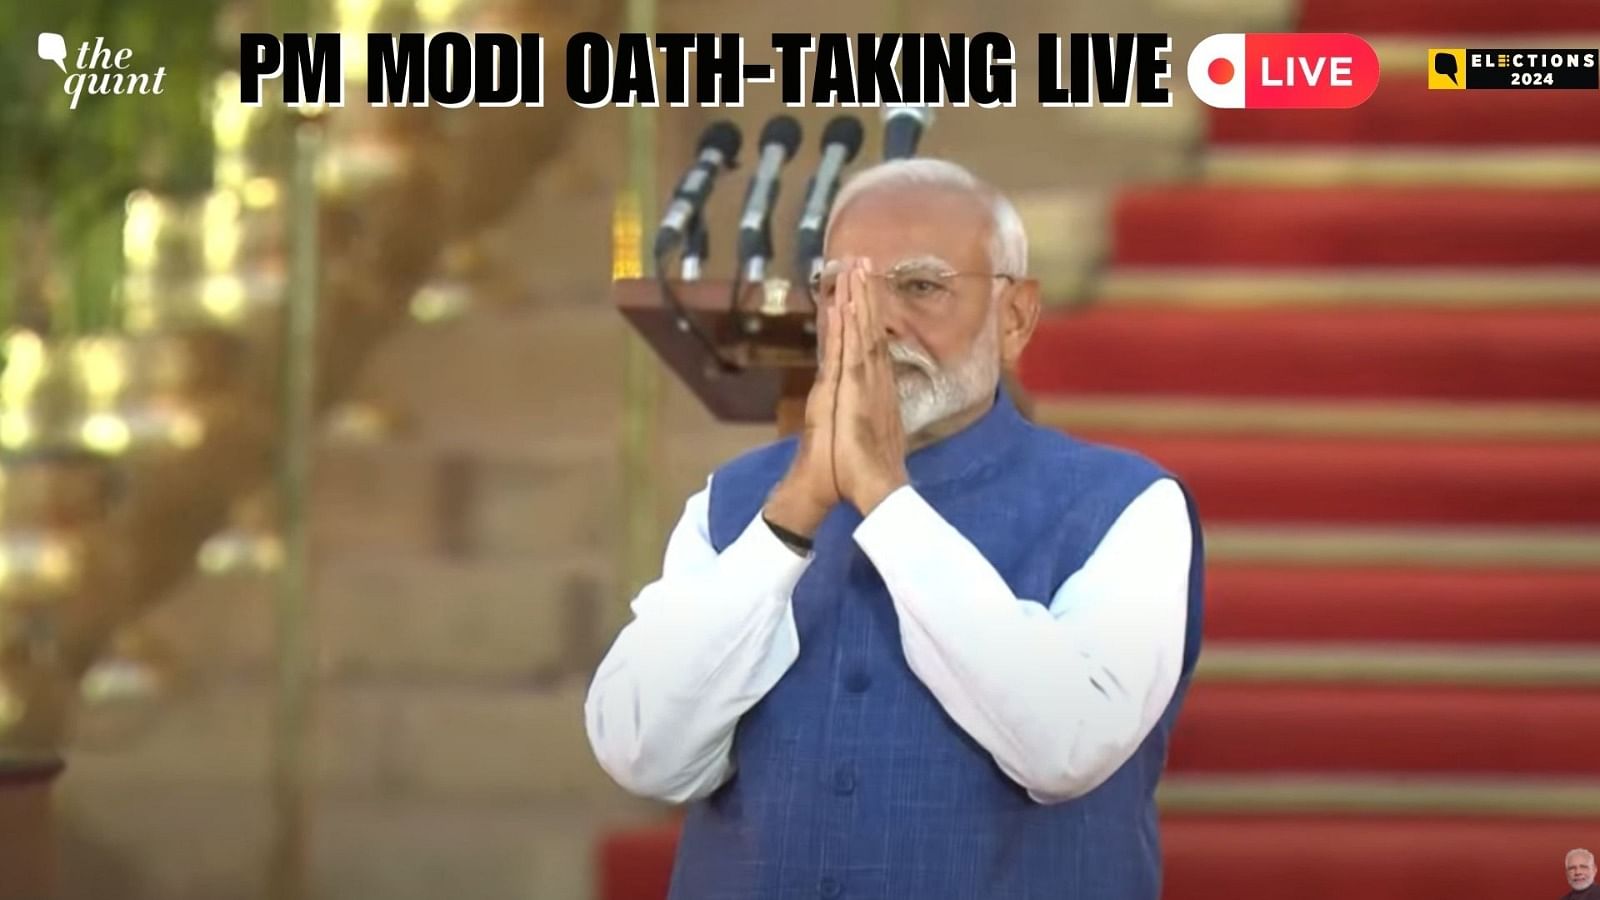 <div class="paragraphs"><p>PM Modi begins taking oath for a third term at Rashtrapati Bhavan in Delhi.</p></div>